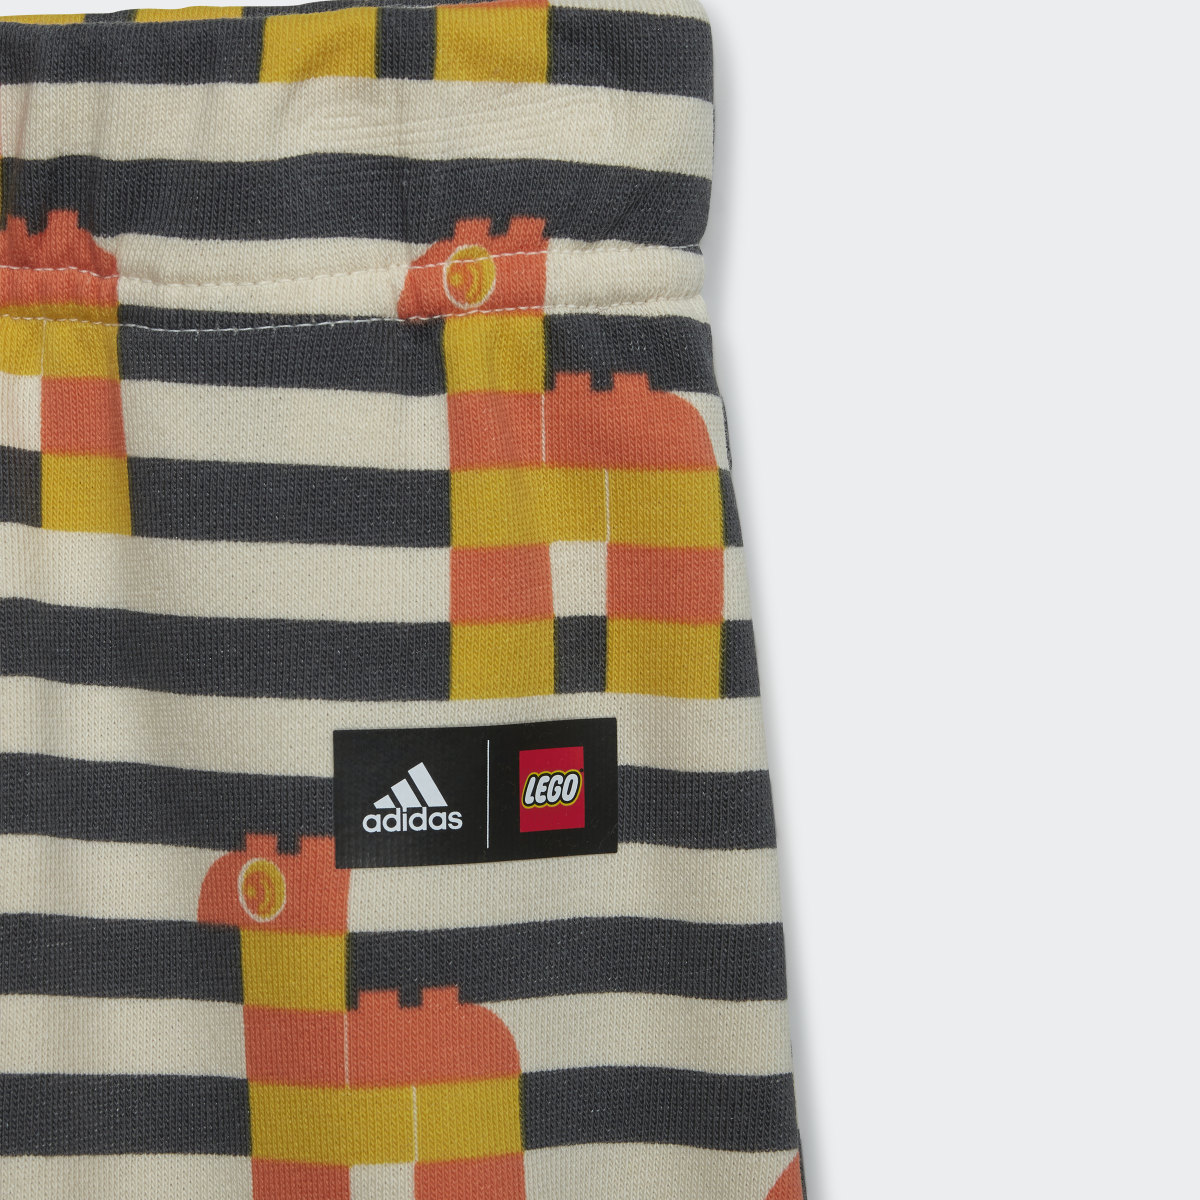 Adidas x Classic LEGO® Tee and Pant Set. 10